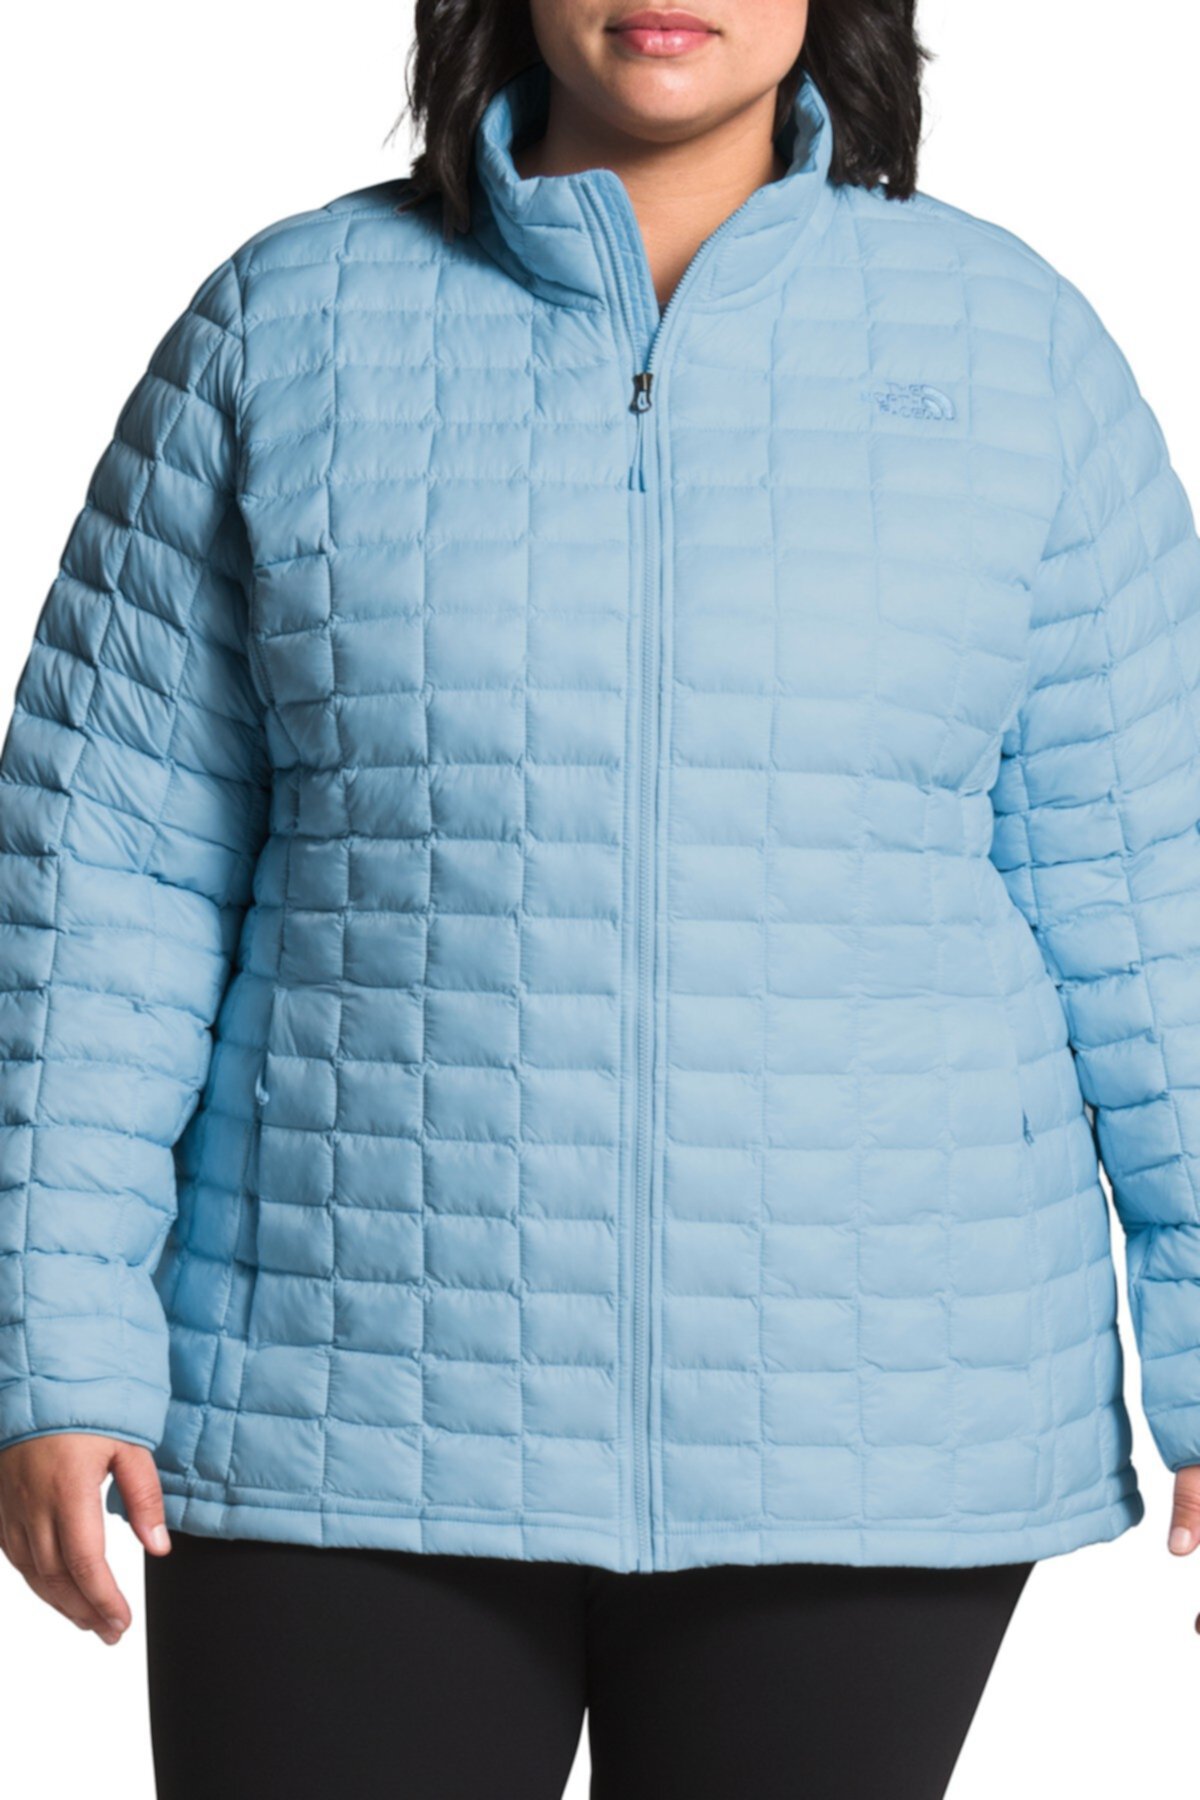 Стеганая куртка Thermoball Eco (большие размеры) The North Face